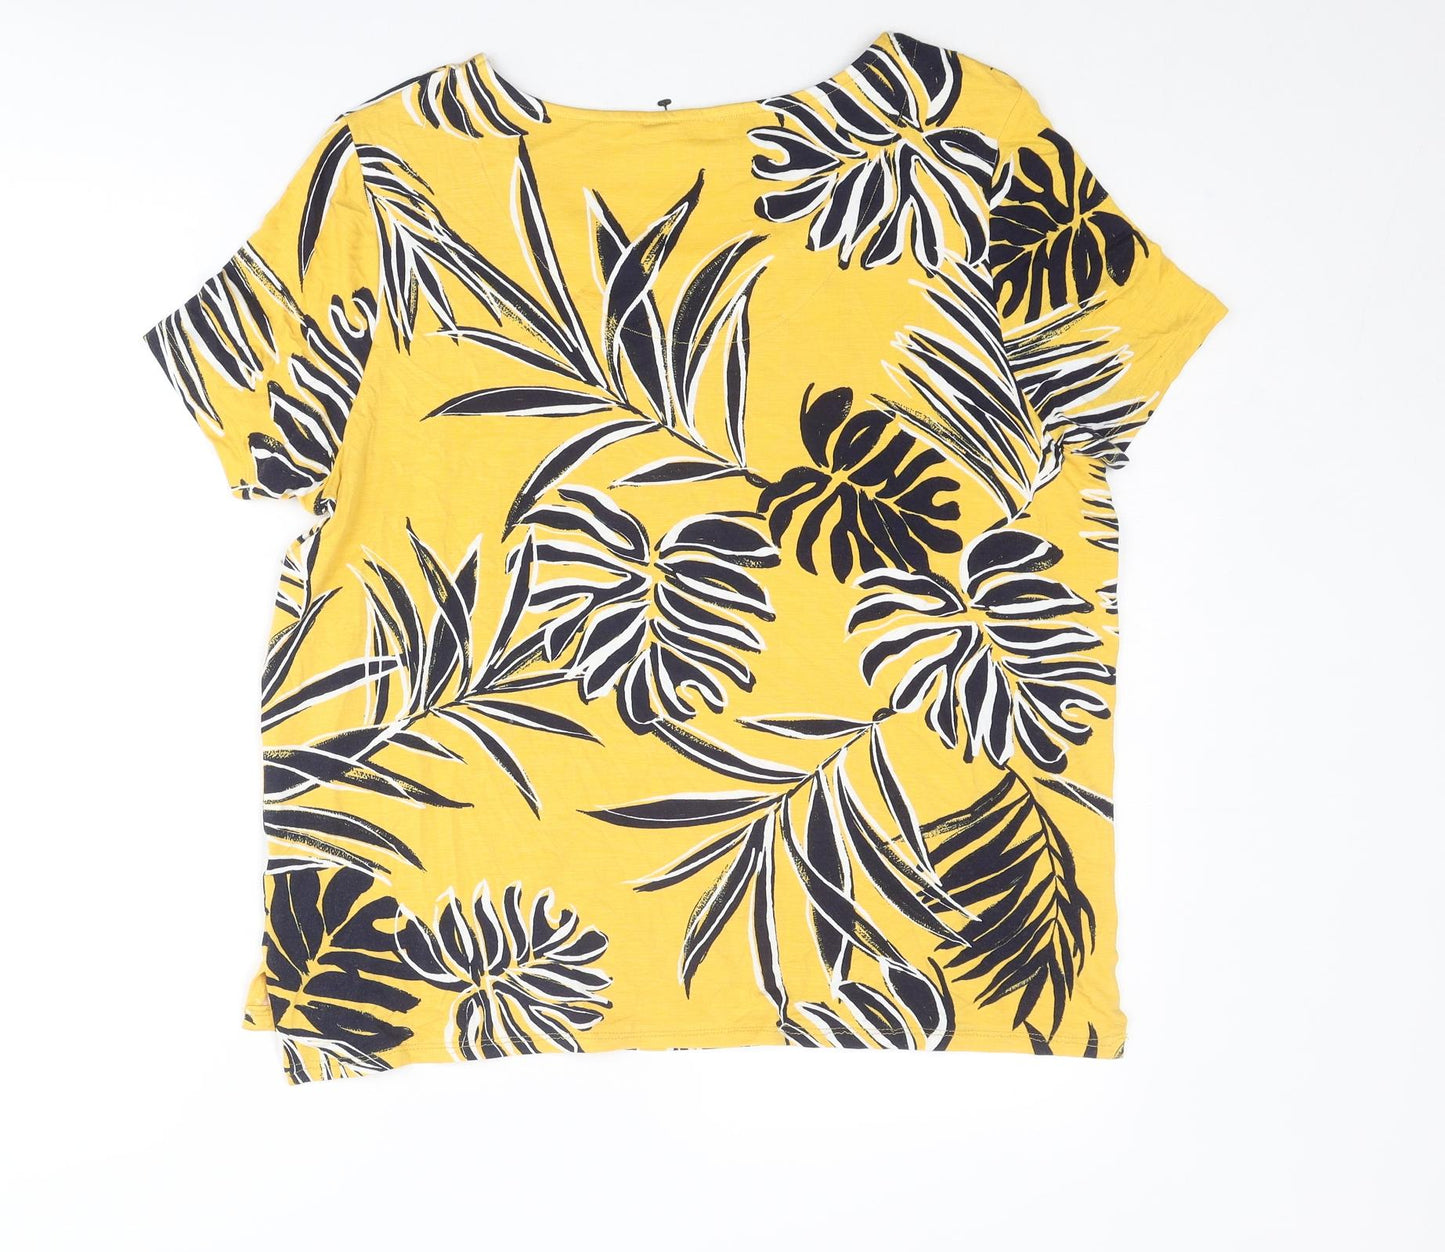 Debenhams Womens Yellow Geometric Viscose Basic T-Shirt Size 16 Round Neck - Leaves Print